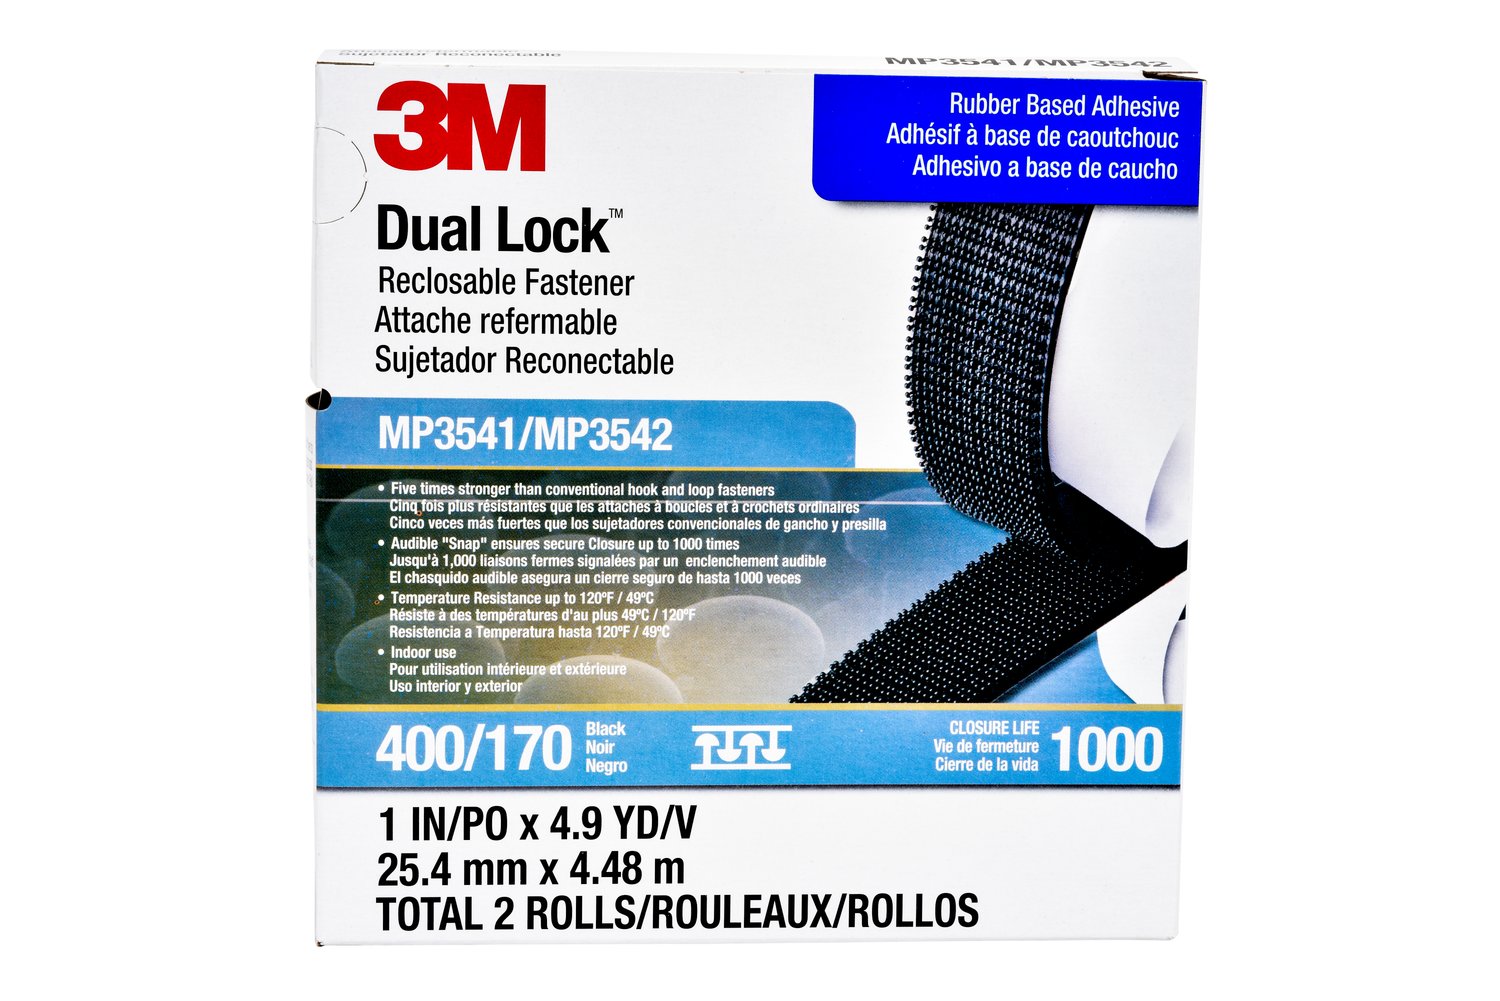 7000051882 - 3M Dual Lock Reclosable Fastener MP3541/MP3542, Black, 1 in x 5 yd,
Type 400/170, 5 per case, PN06483